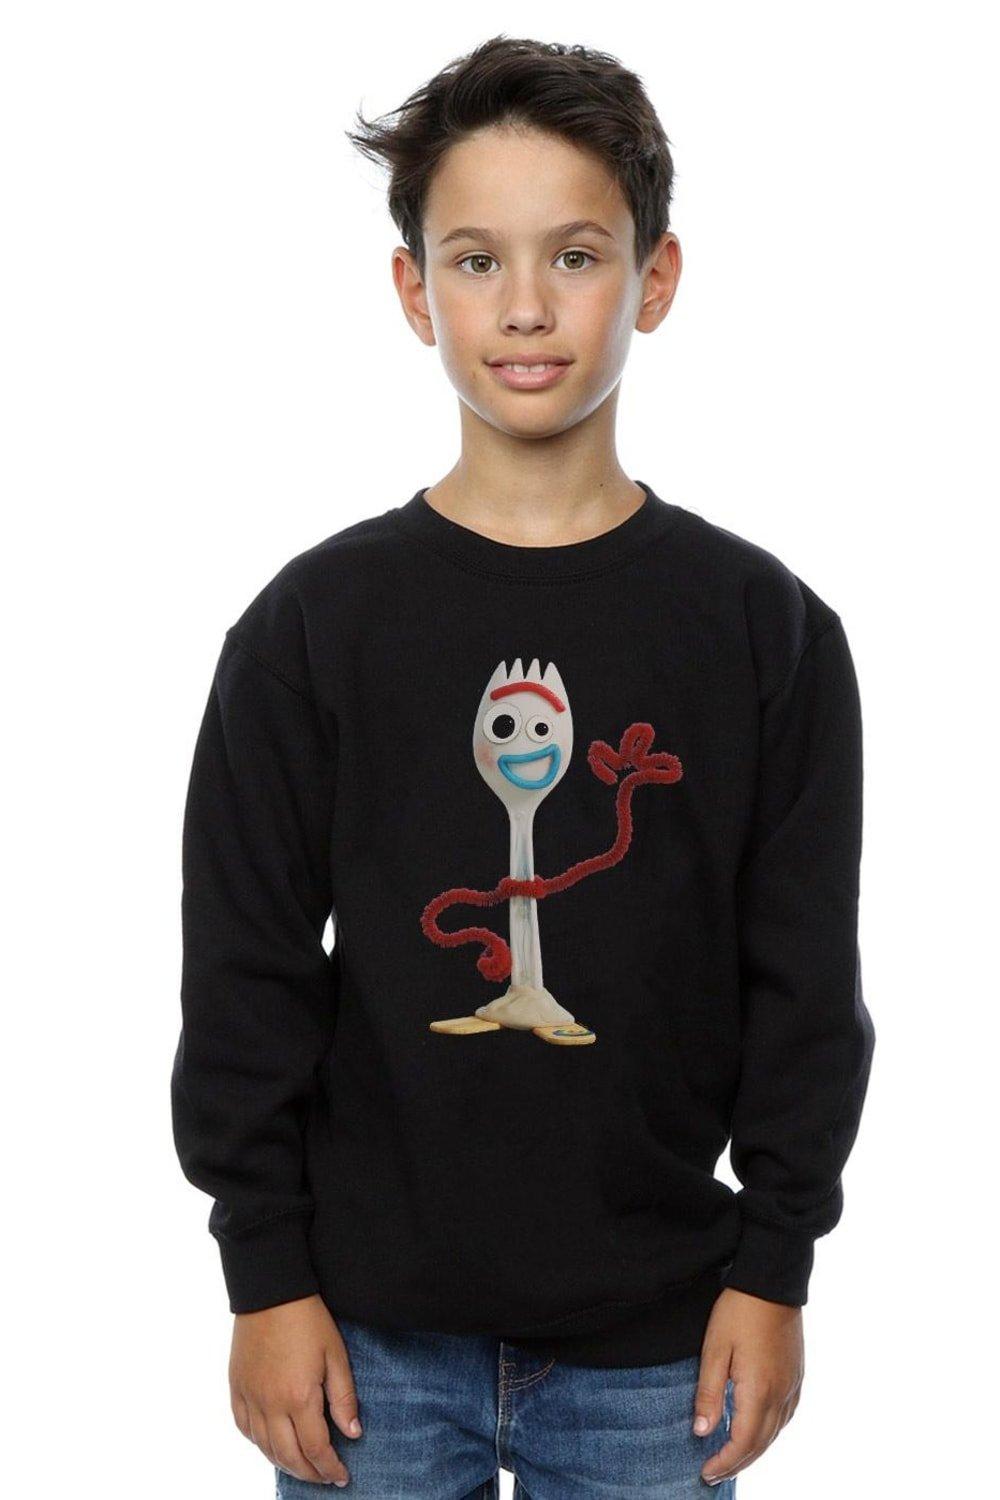 Toy Story 4 Forky Sweatshirt